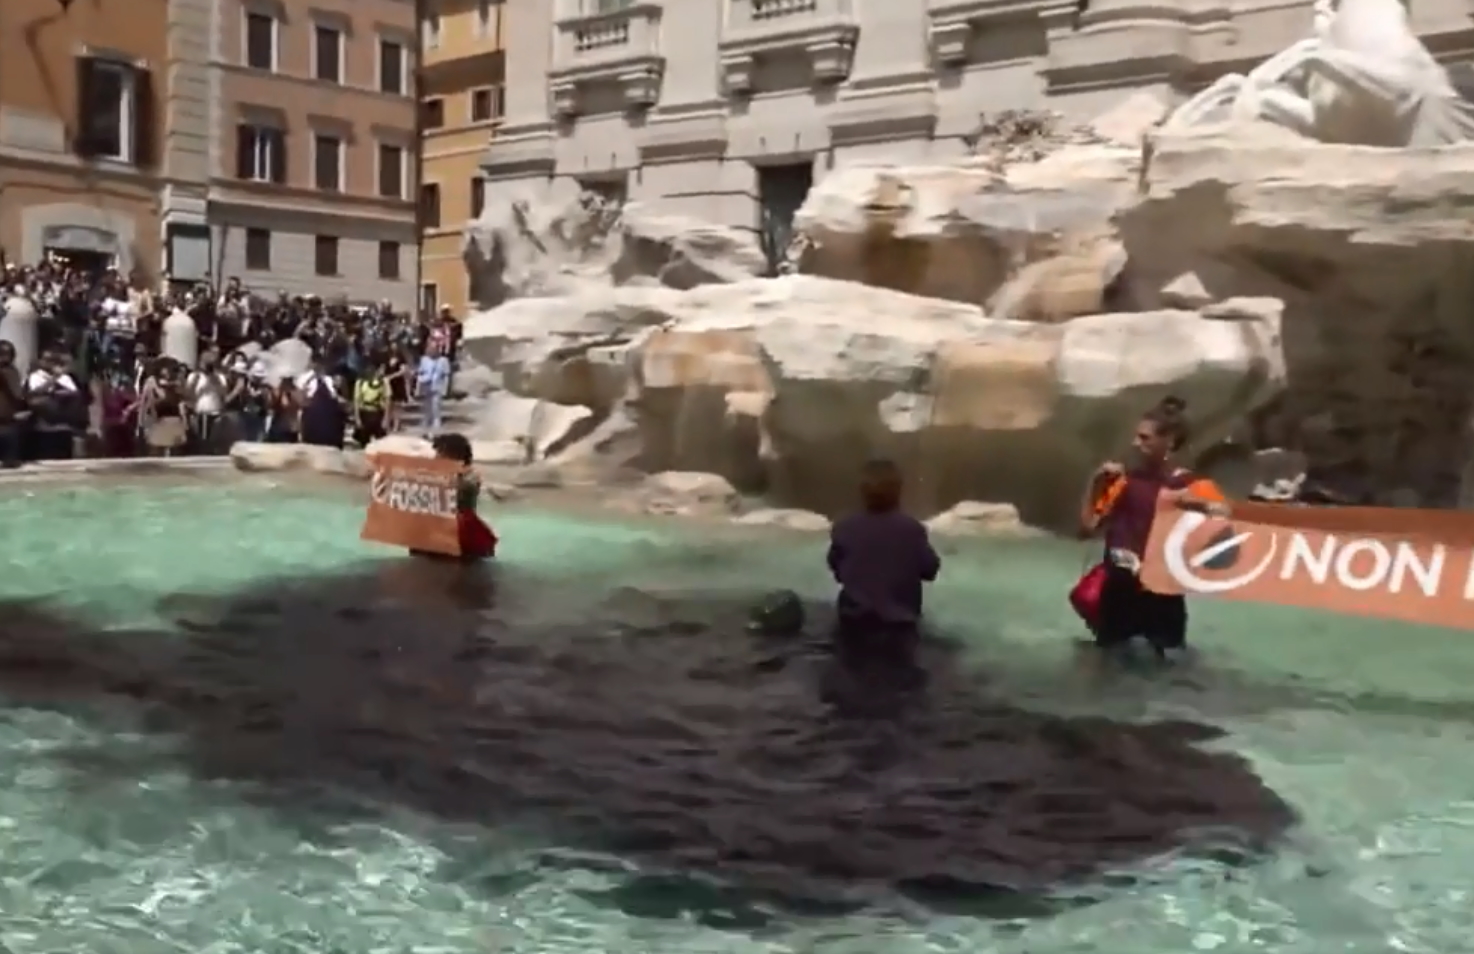 Activists ‘paint’ the Trevi Fountain black